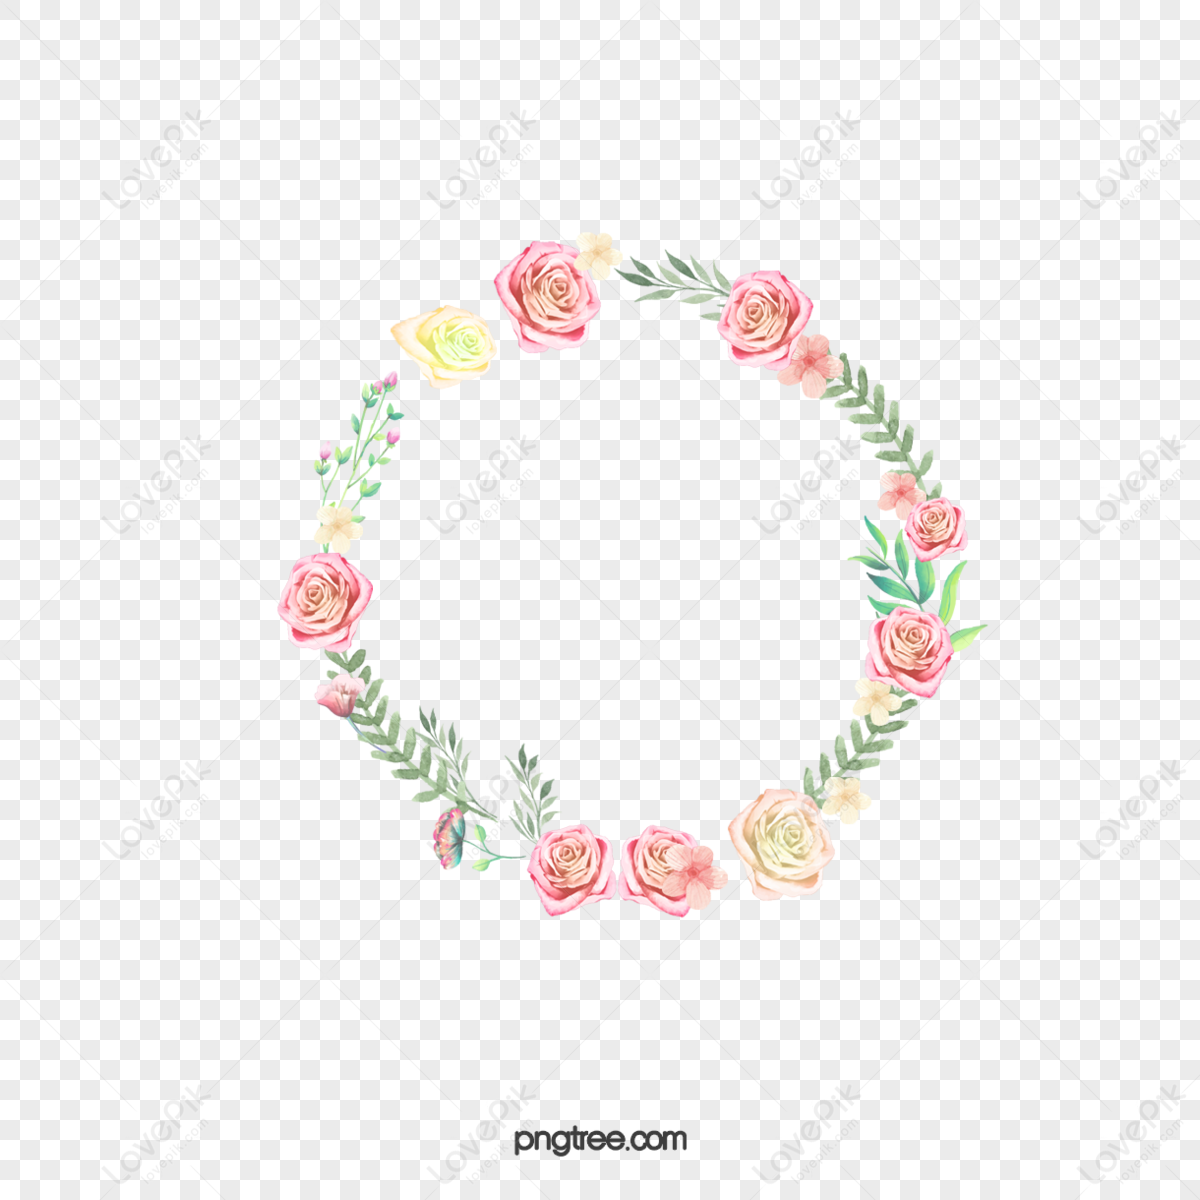 Rose Decorative Circular Border,illustration,labels,symbol PNG Image ...